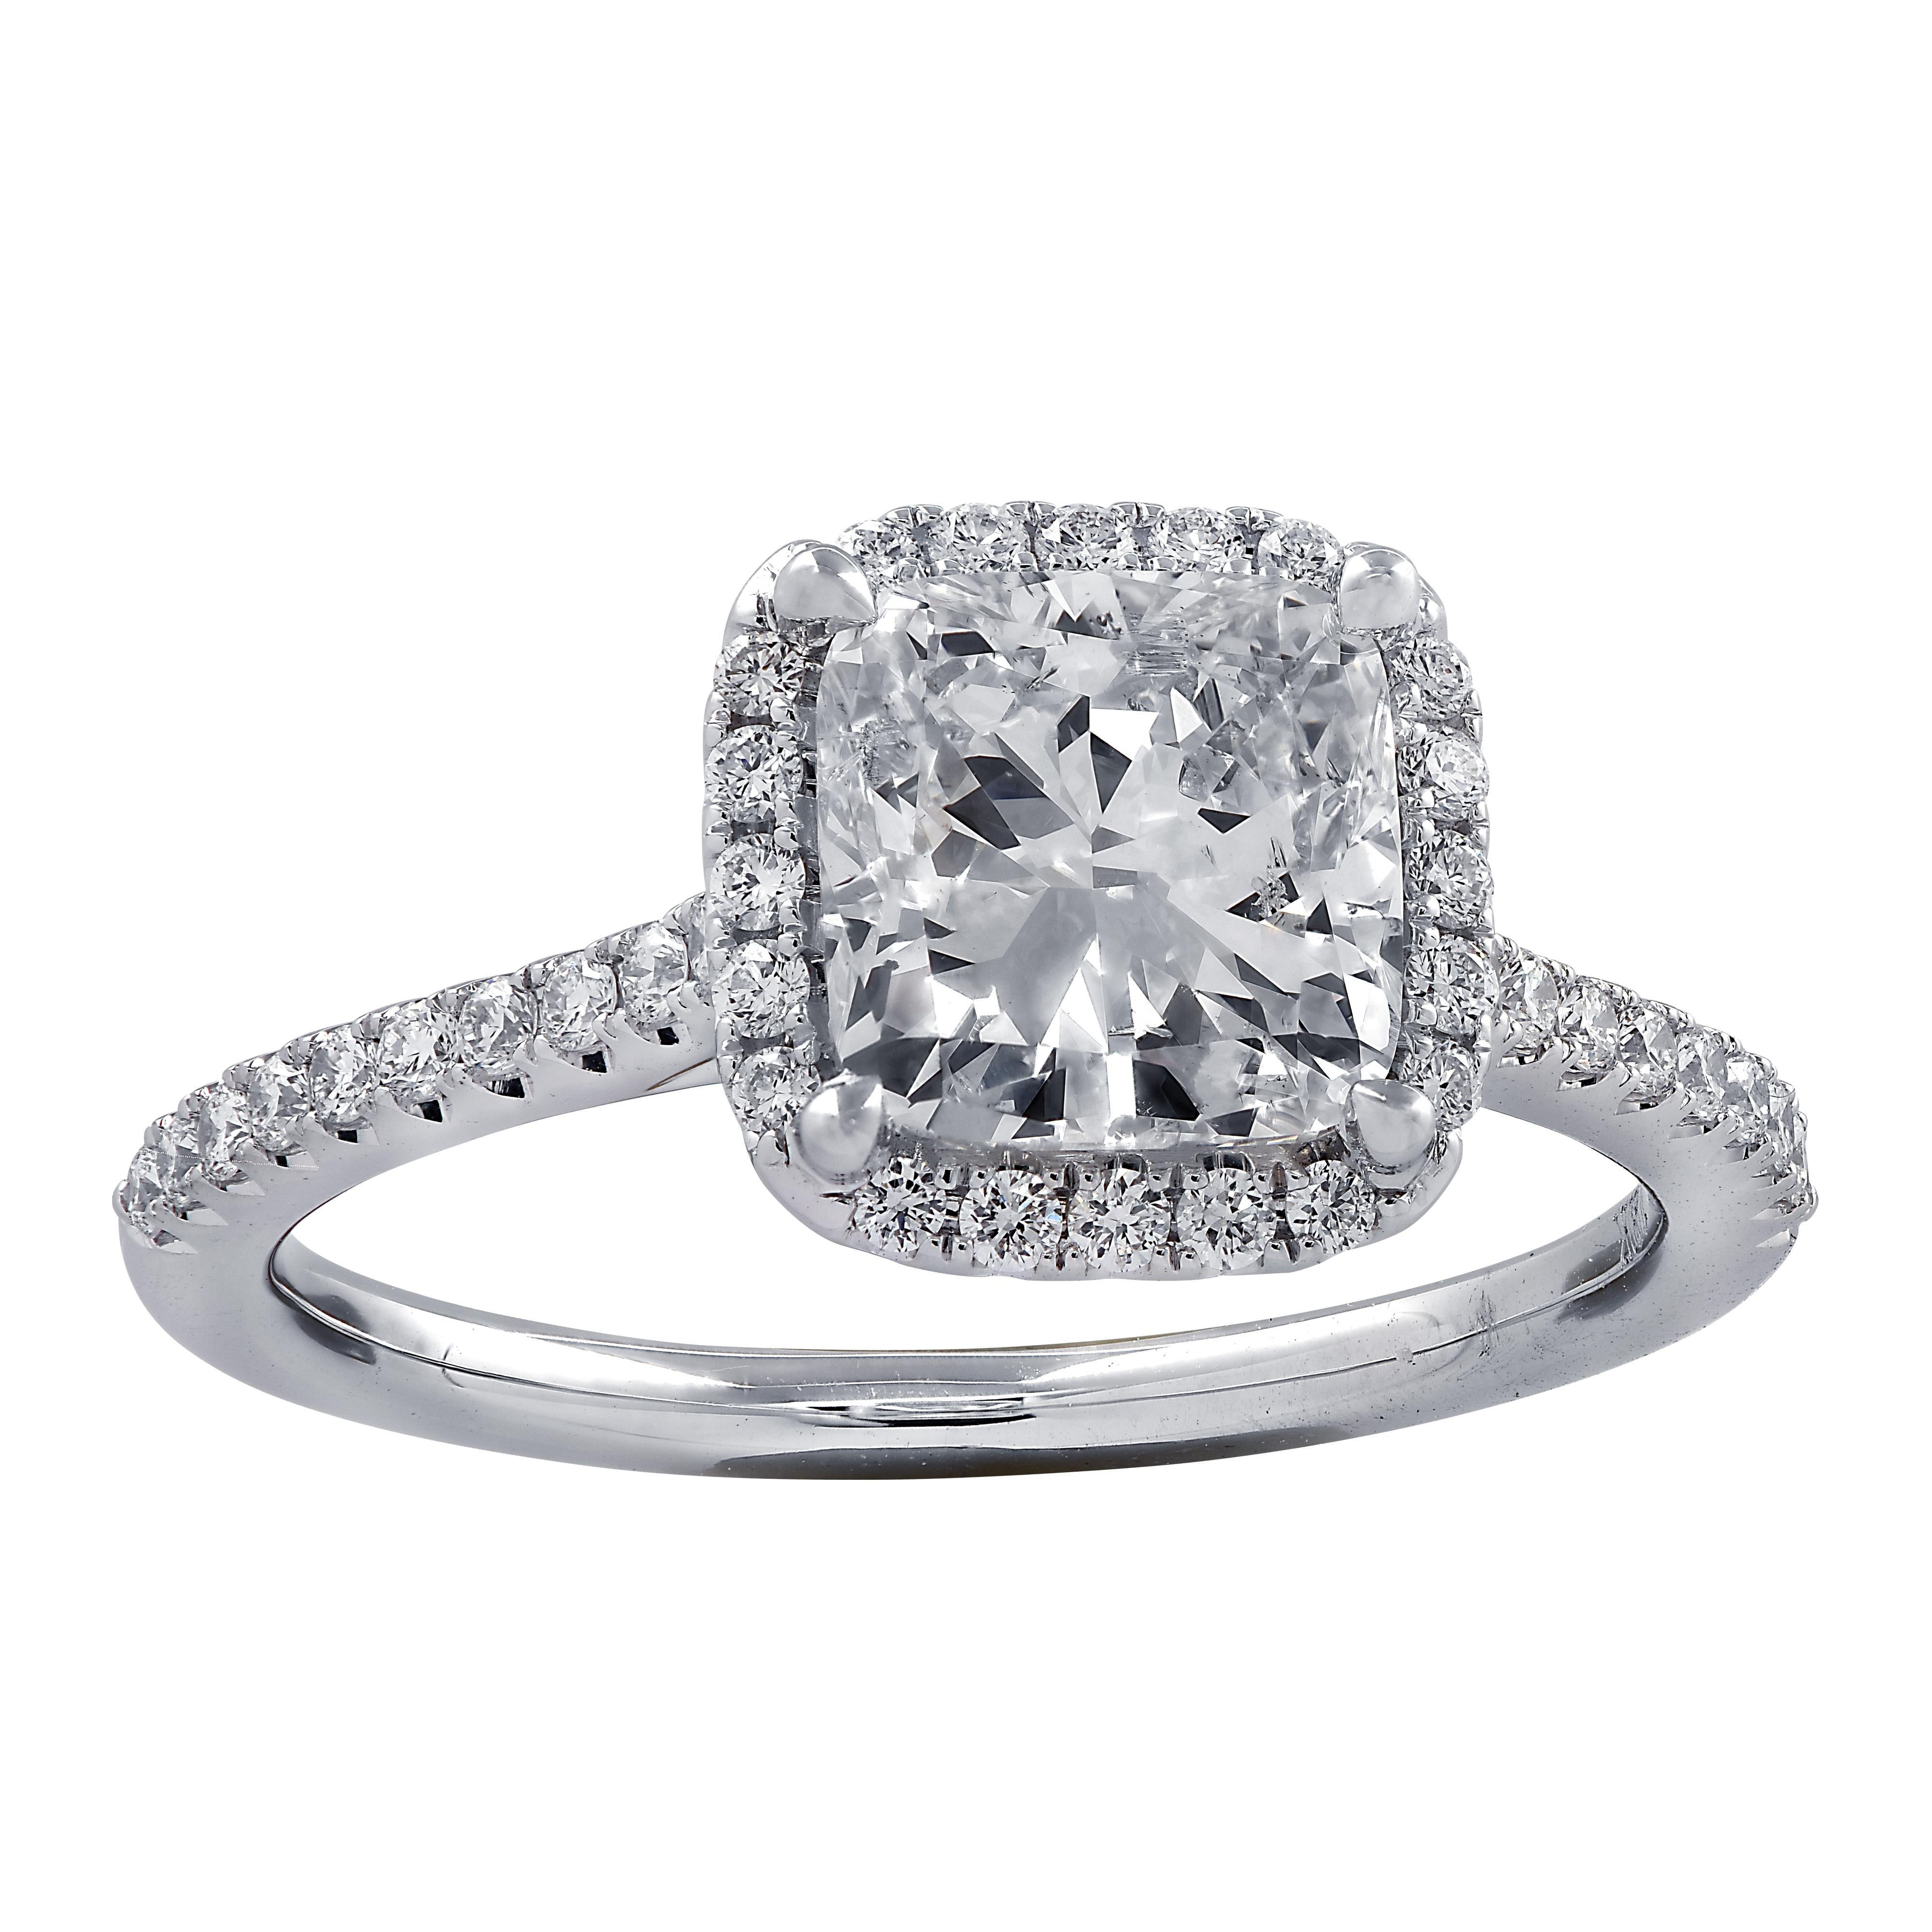 Cushion Cut Vivid Diamonds GIA Certified 1.81 Carat Diamond Halo Ring